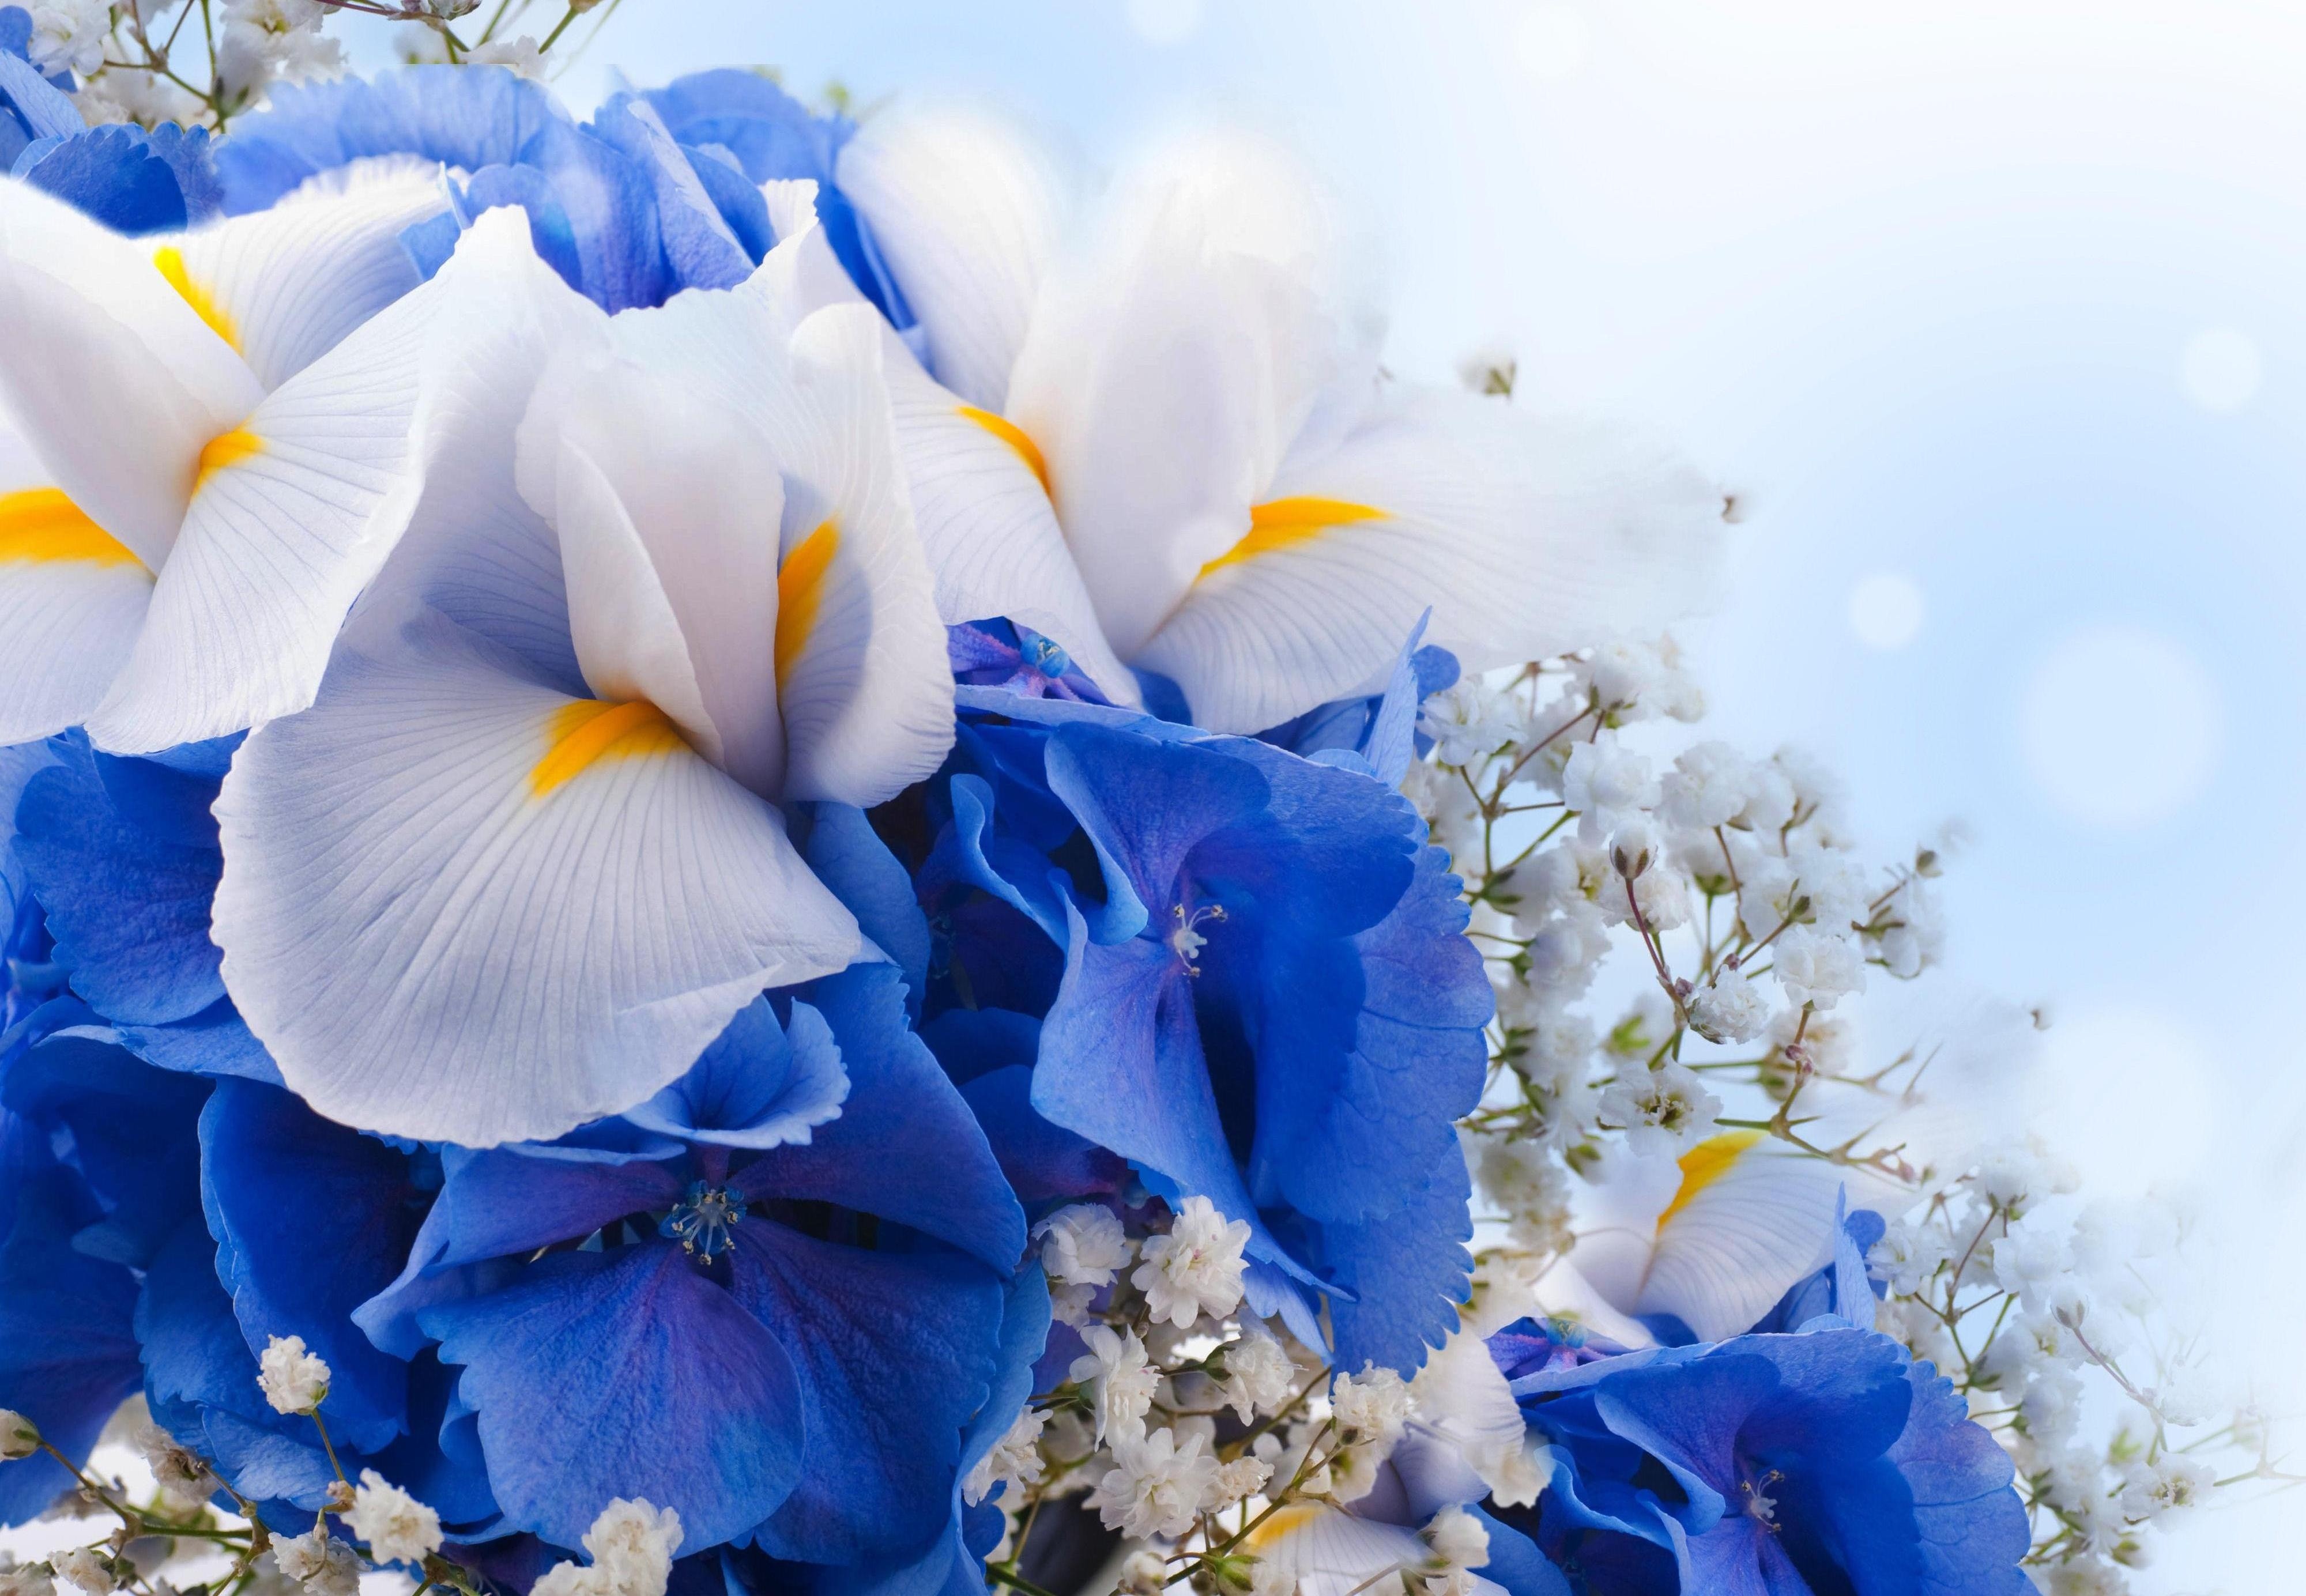 iris, earth, baby's breath, blue flower, white flower, flowers